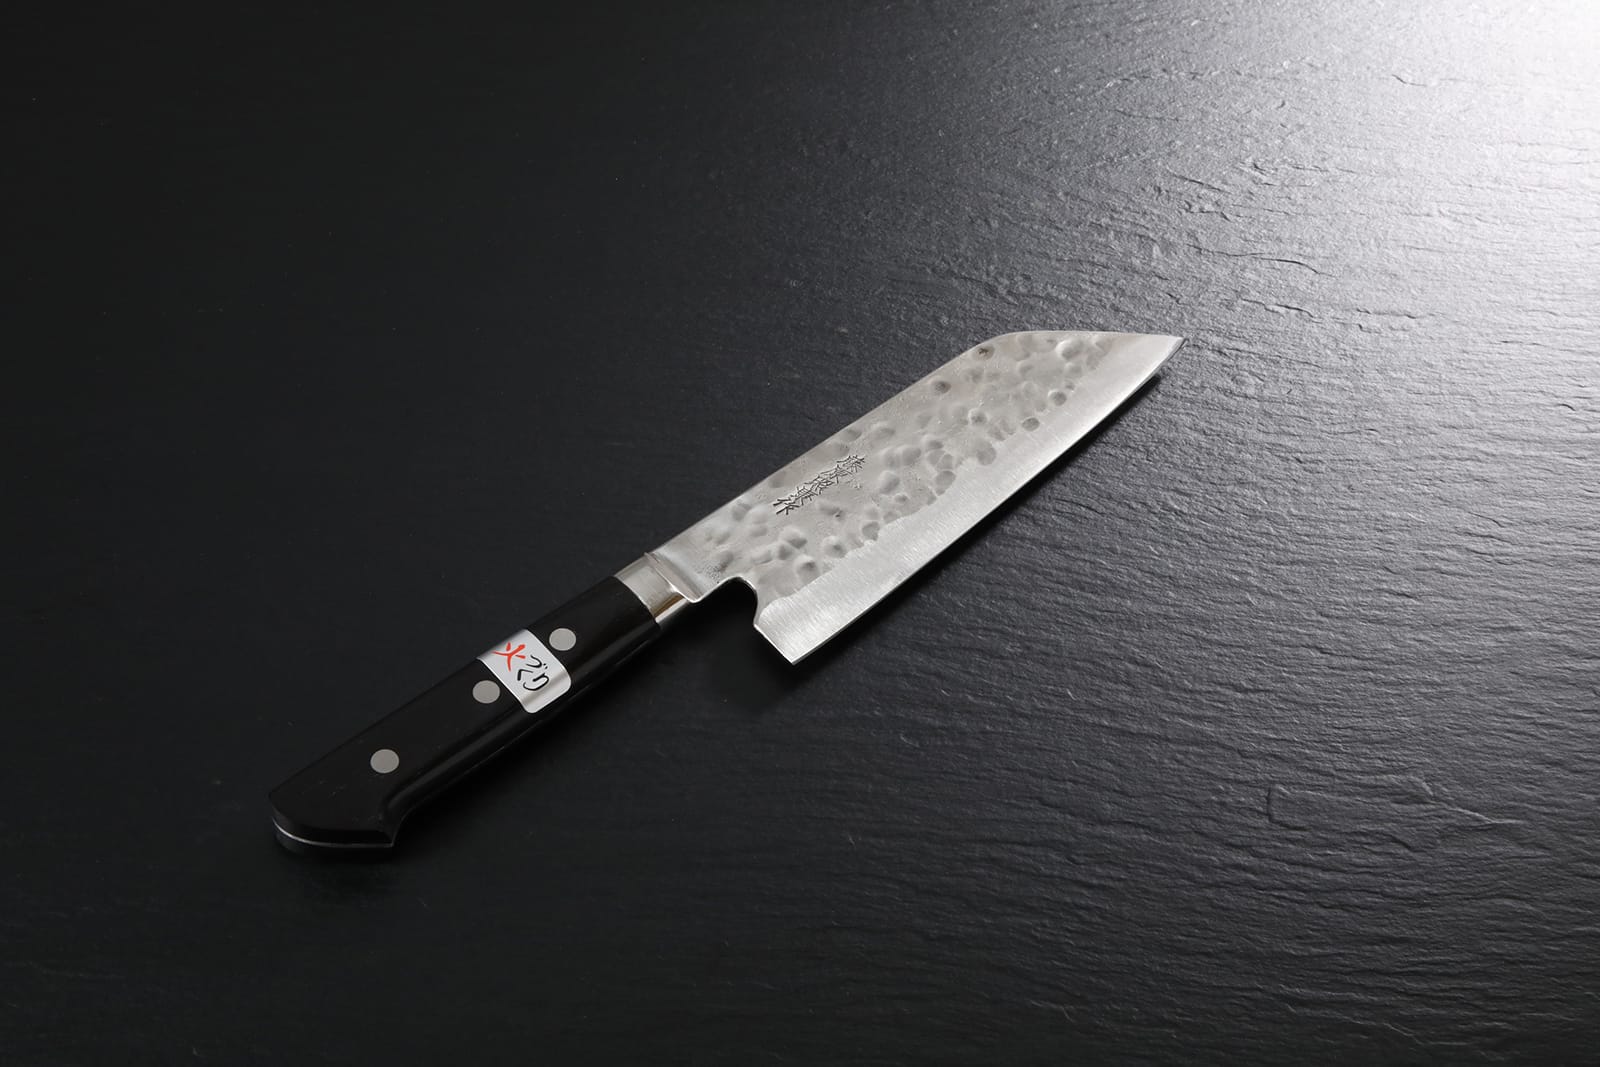 Japanese Santoku knife [Maboroshi], Santoku Knife